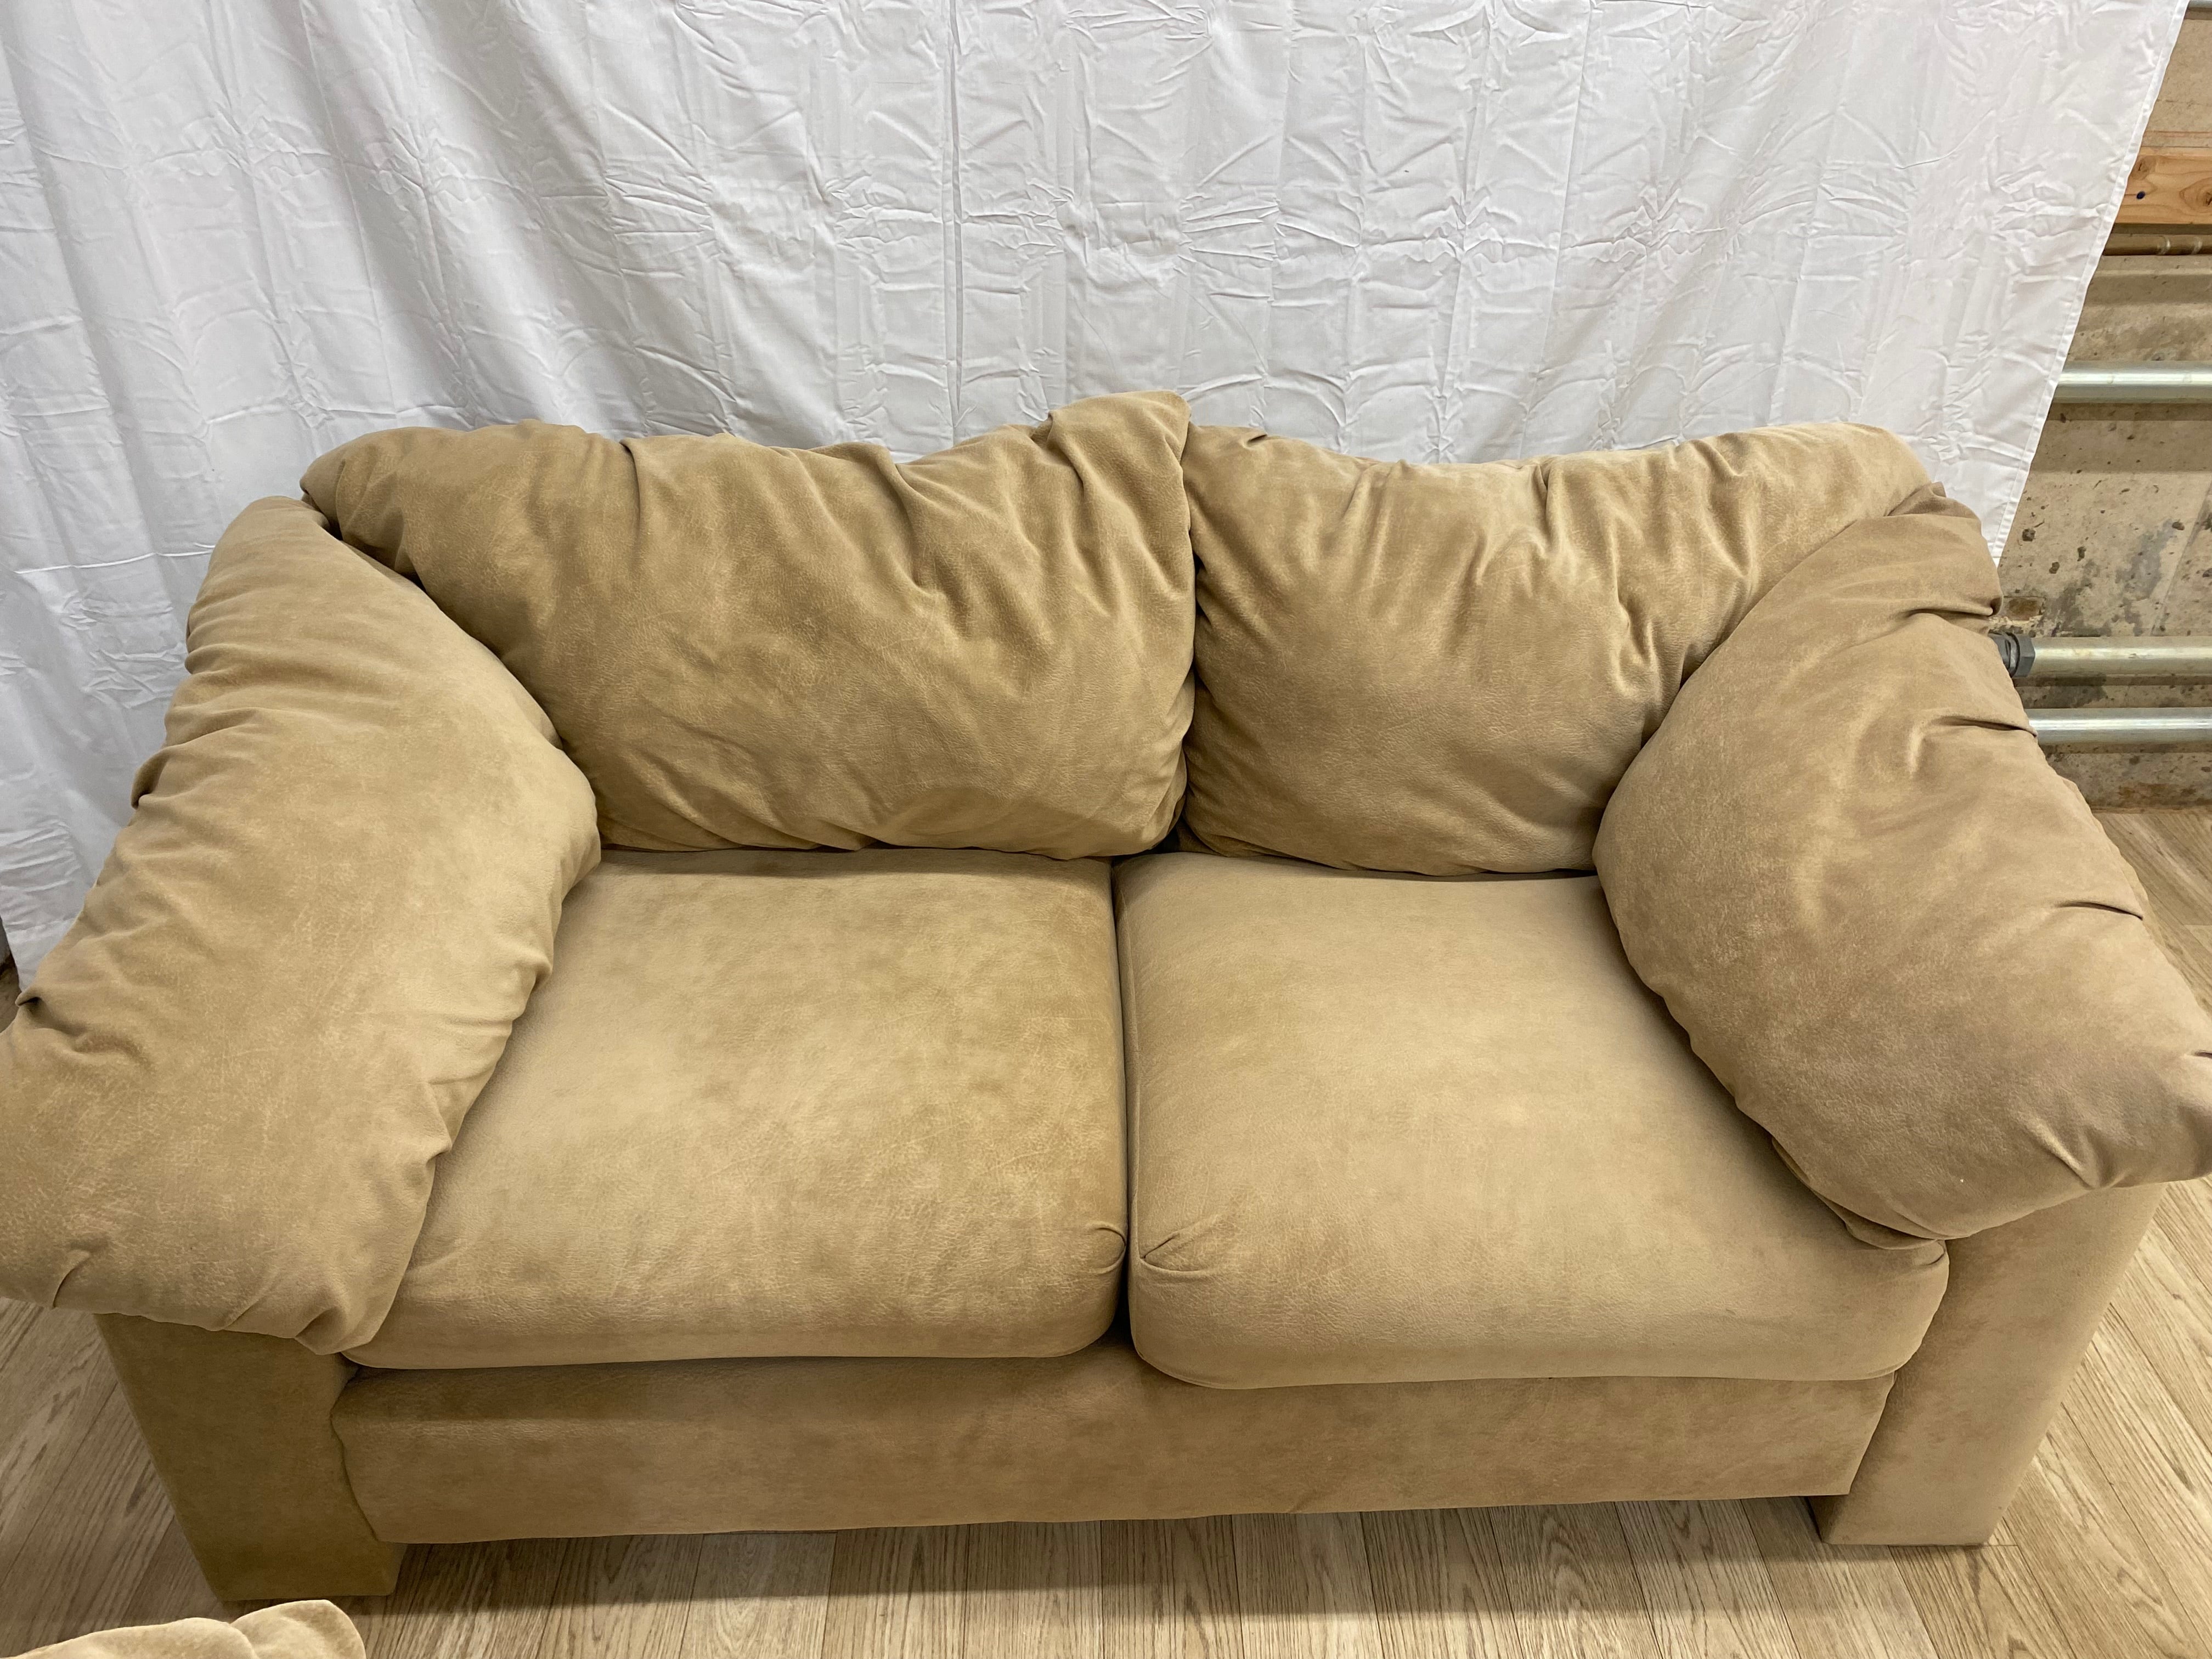 Vintage Beige Sofa Set